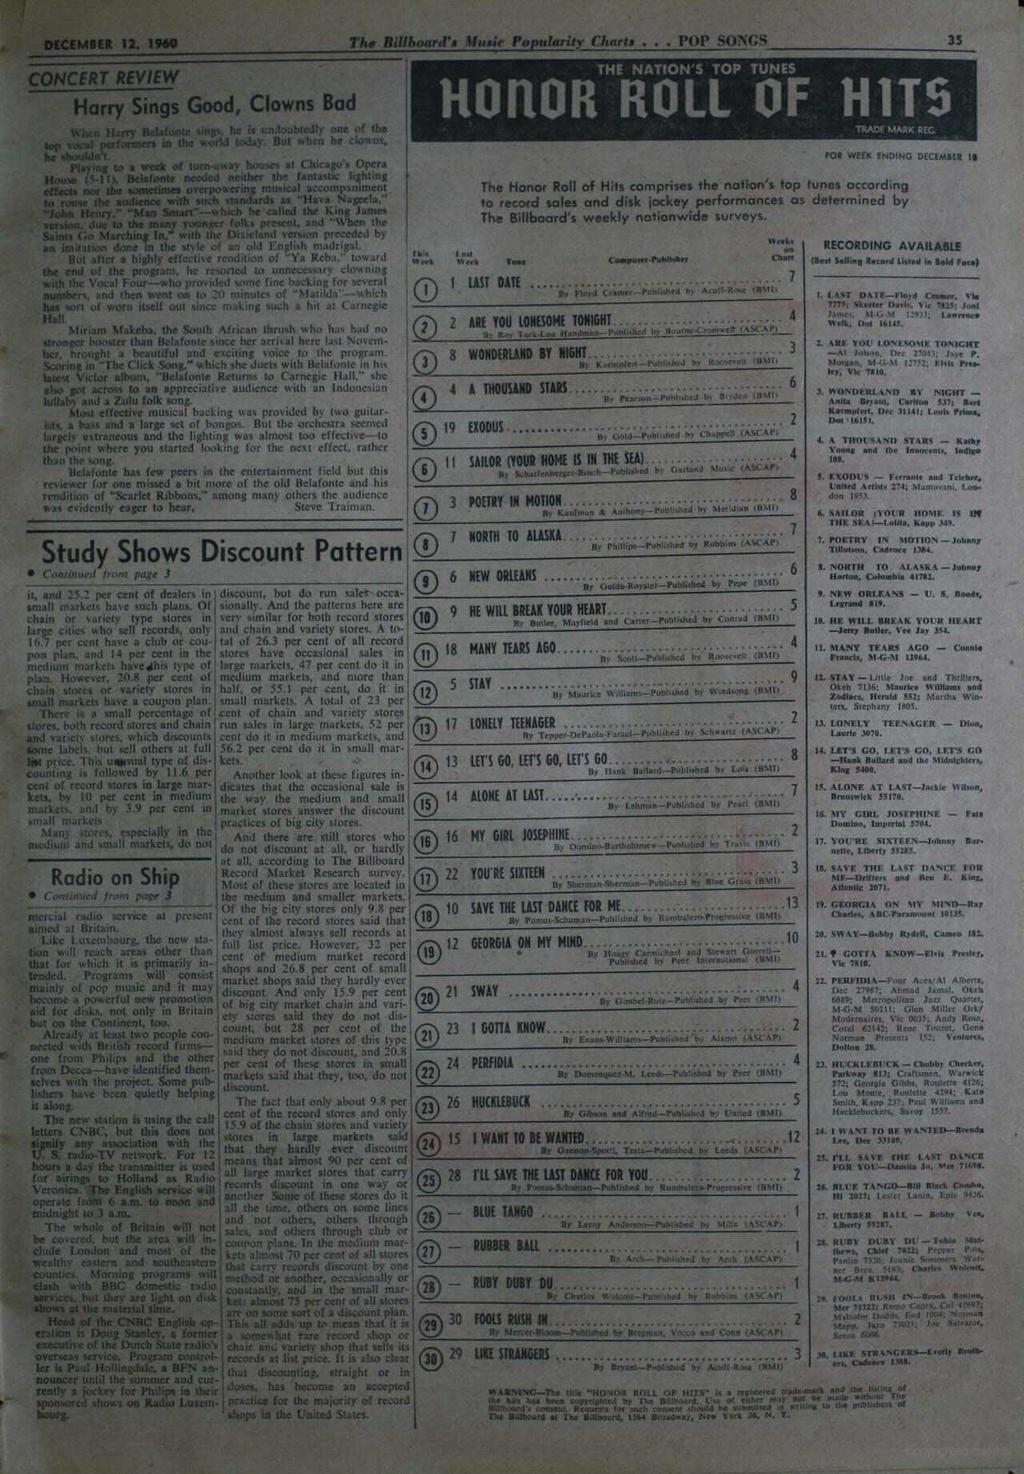 DECEMBER 12, 1960 The Billboard's Almair Popularity Charta.